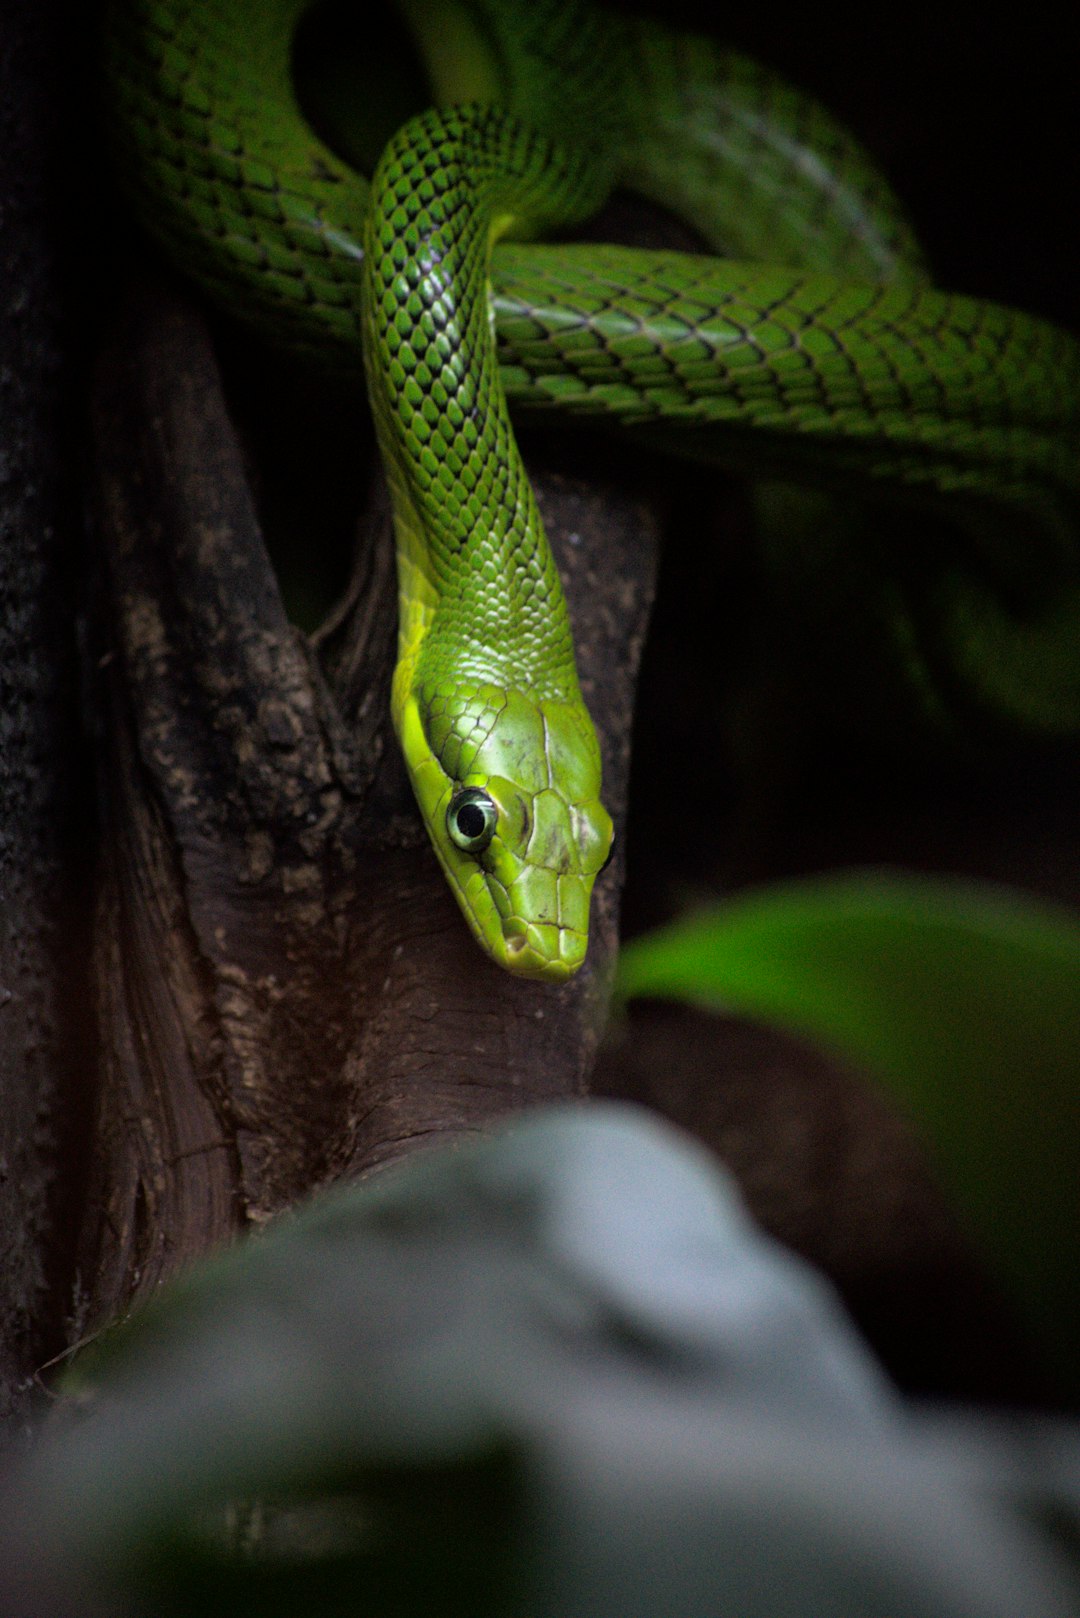  green snake on brown tree branch snake